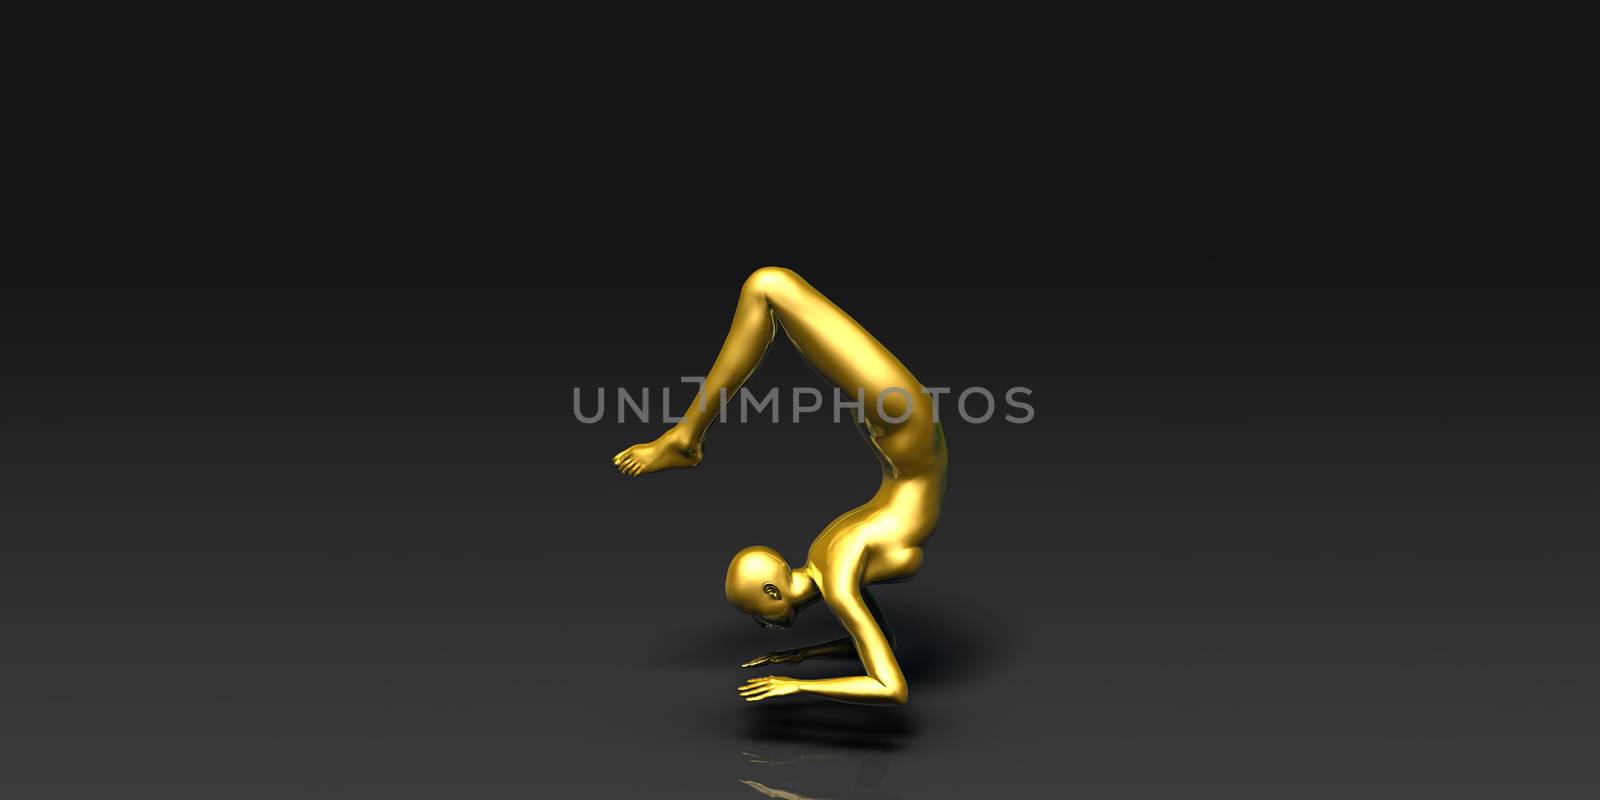 The Scorpion Yoga Pose by kentoh